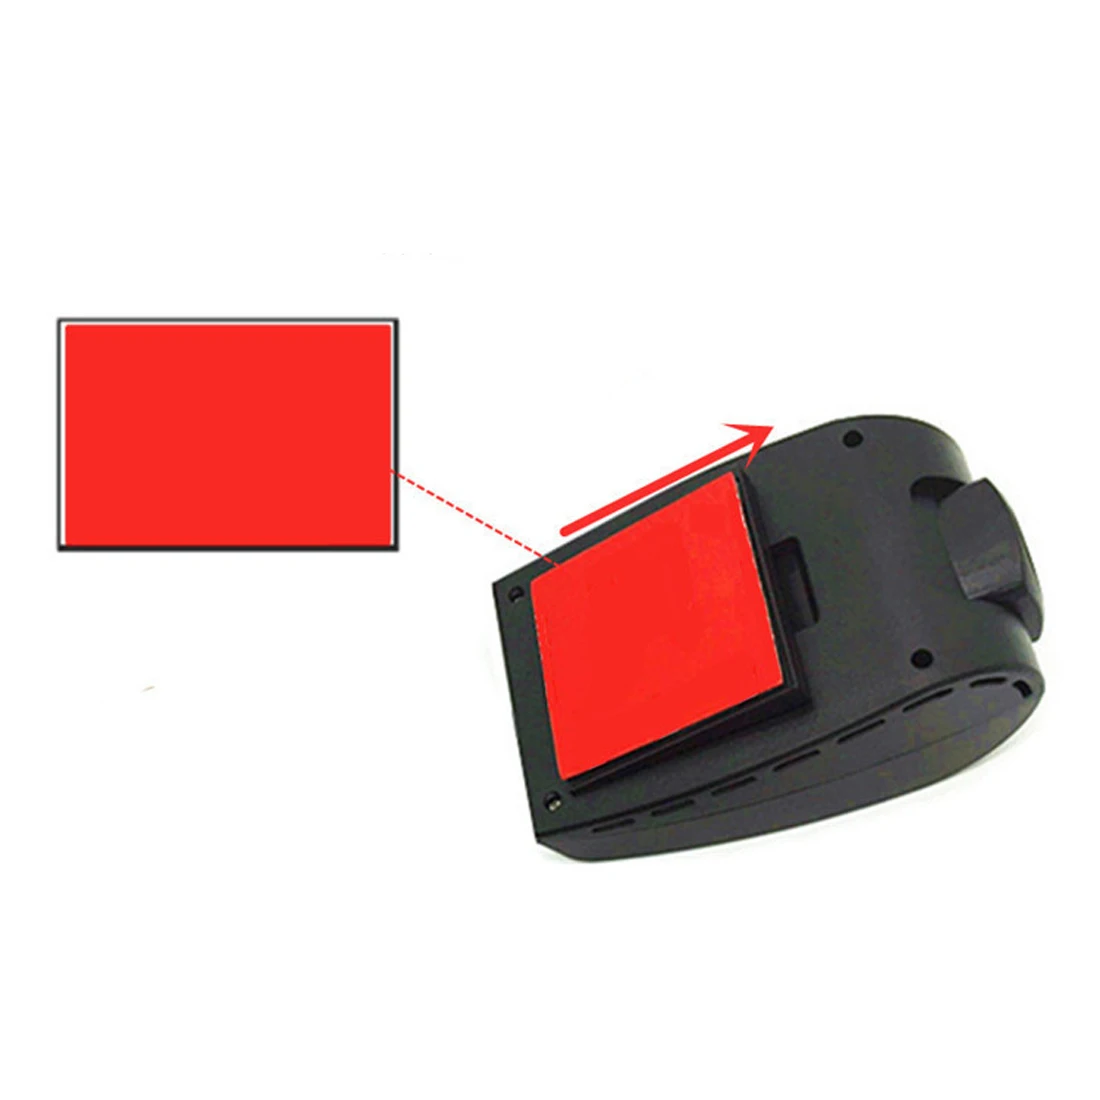 Dewtreetal Горячая Автомобильная dvr камера USB DVR камера для Android 4,2/4,4/5.1.1/6.0.1 автомобильный ПК dvr камера рекордер вождения